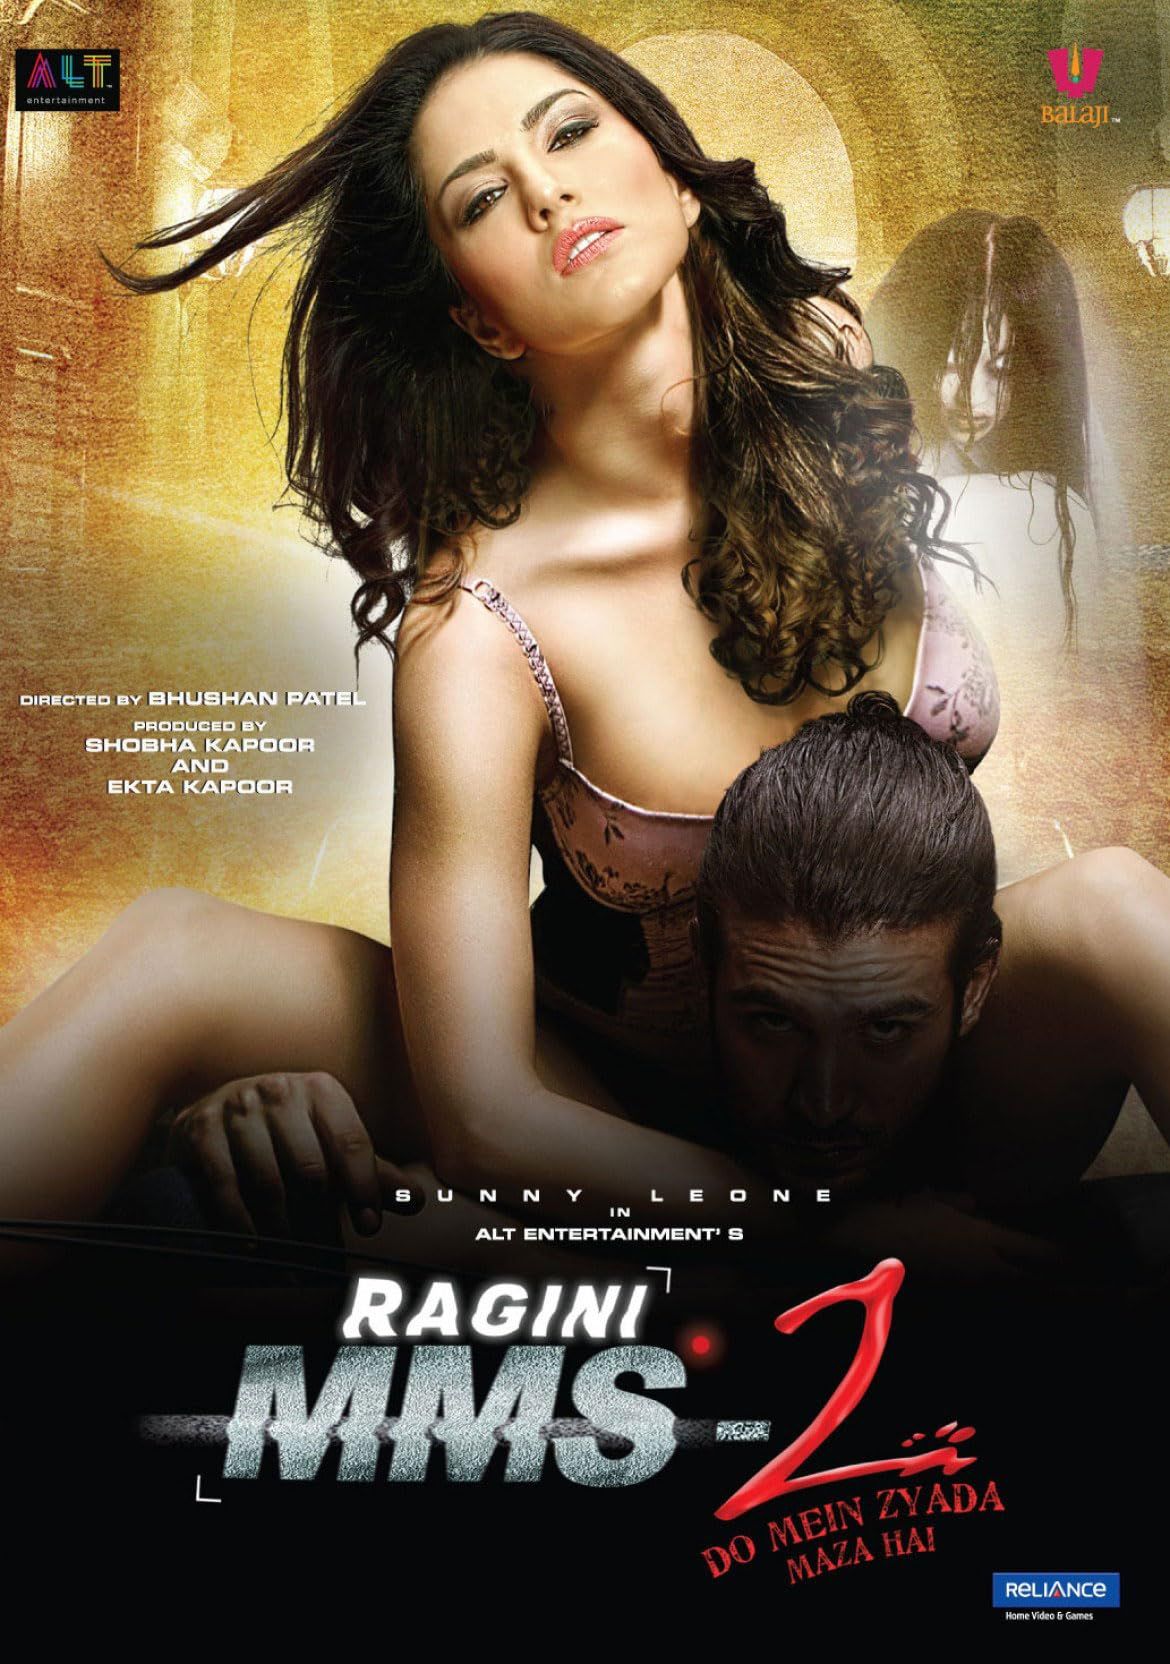 Ragini MMS 2 (2014) Hindi Movie download full movie